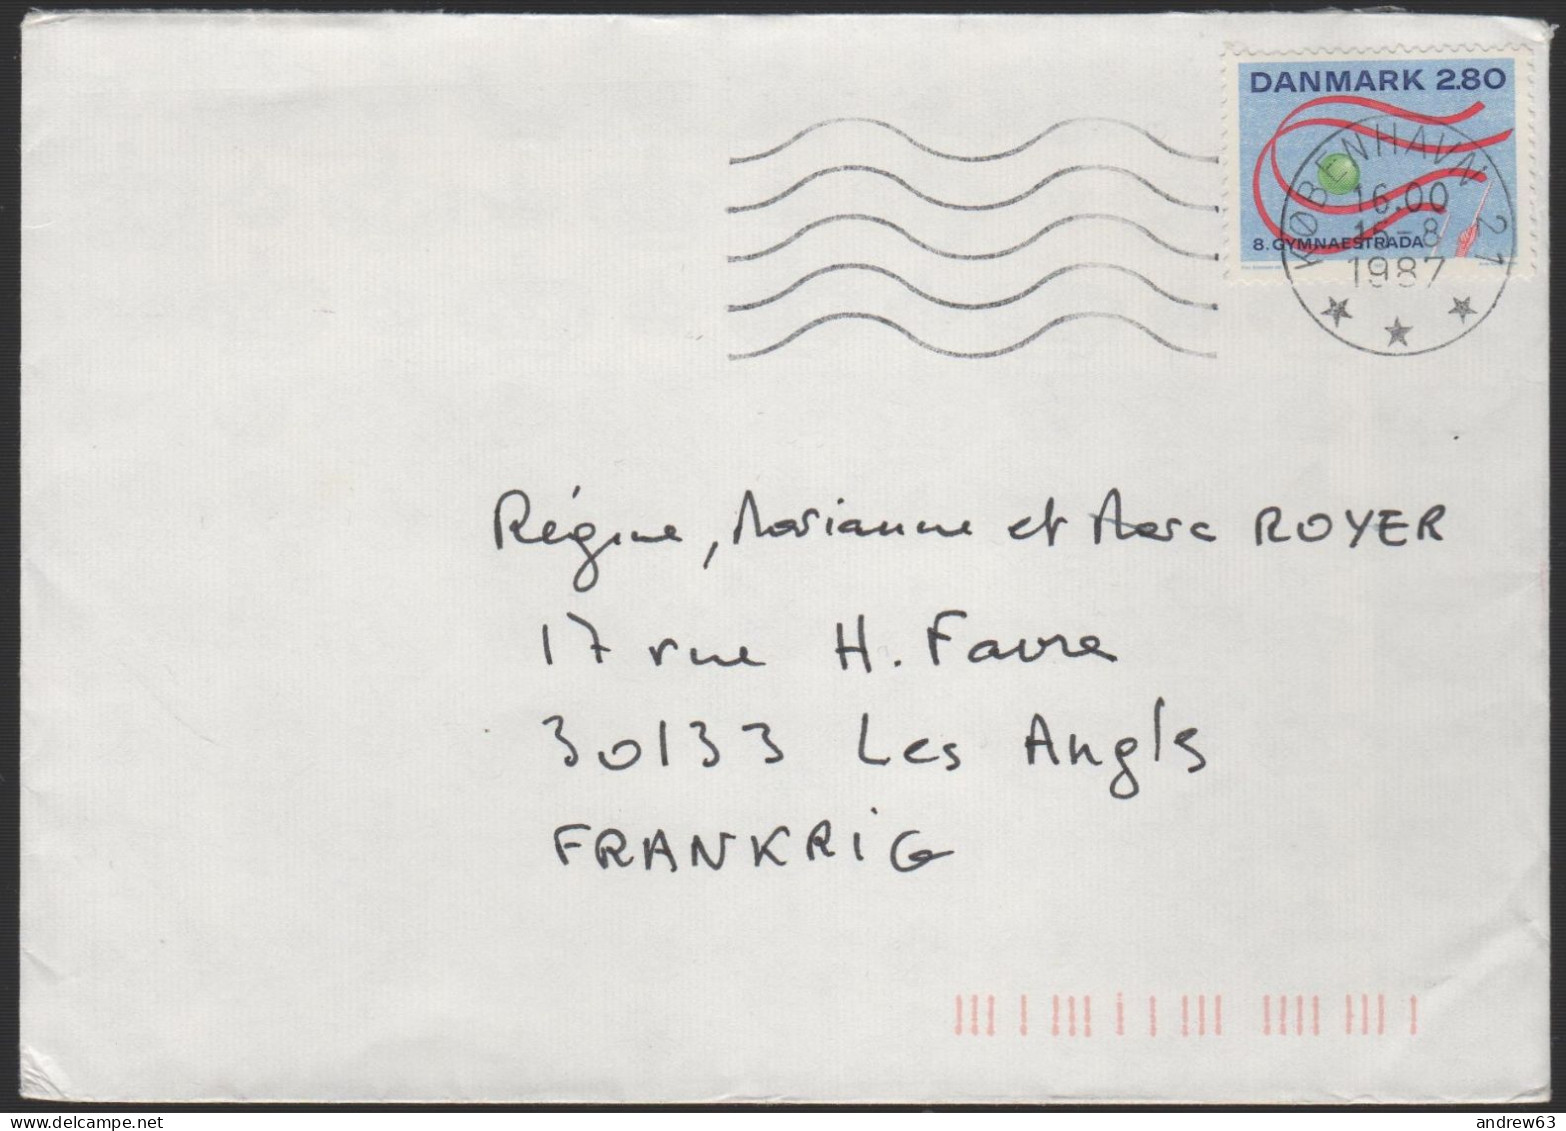 DANIMARCA - DANMARK - 1987 - 2,80 World Gymnastics Show - Viaggiata Da København Per Les Angles, France - Covers & Documents